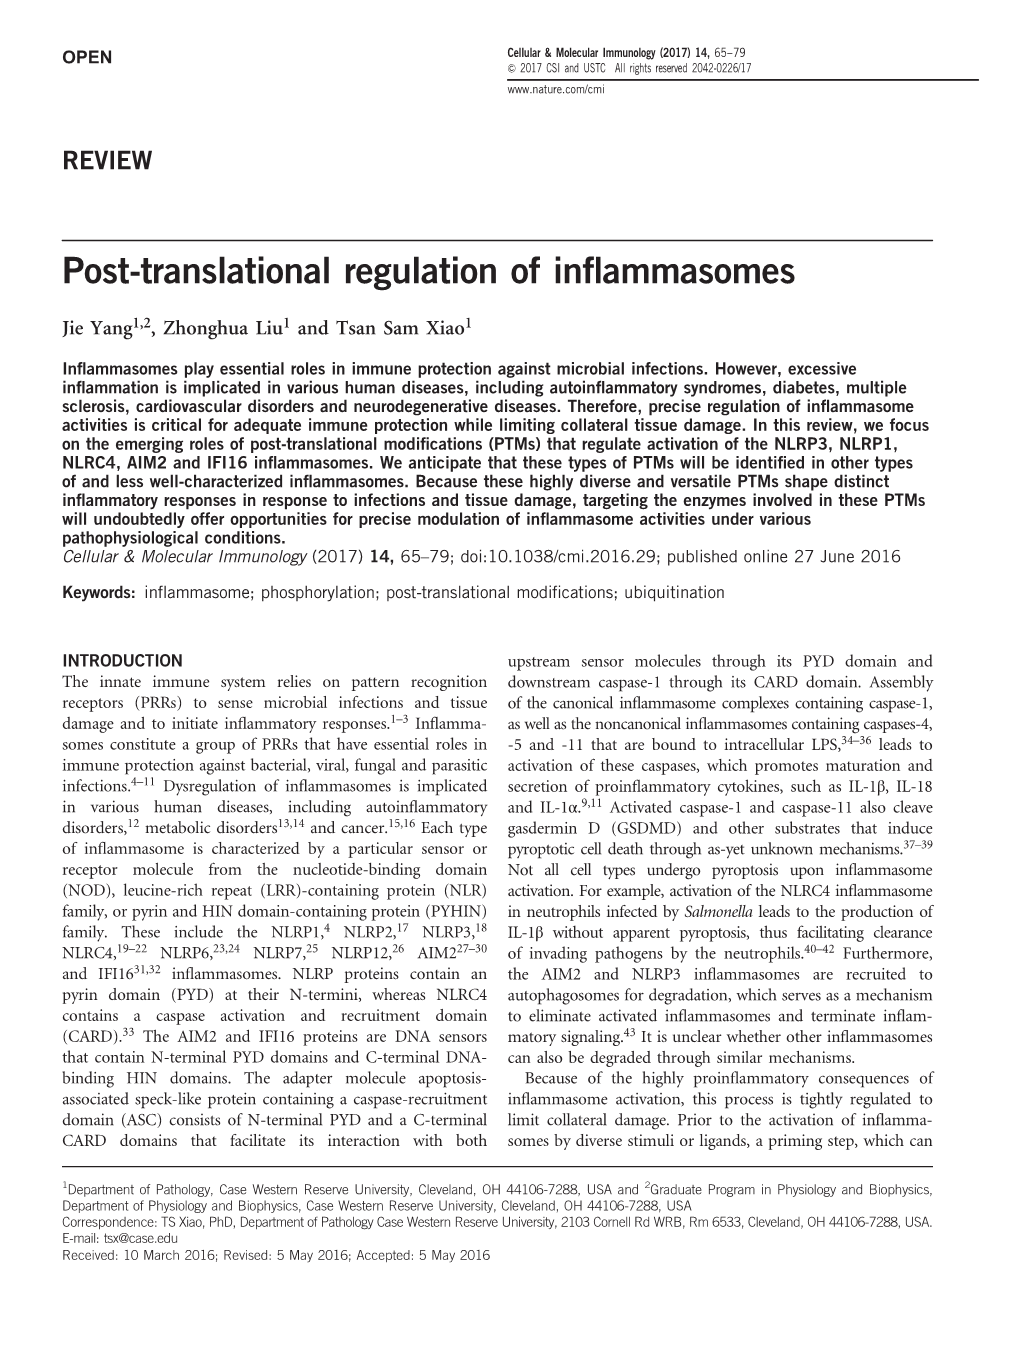 Post-Translational Regulation of Inflammasomes